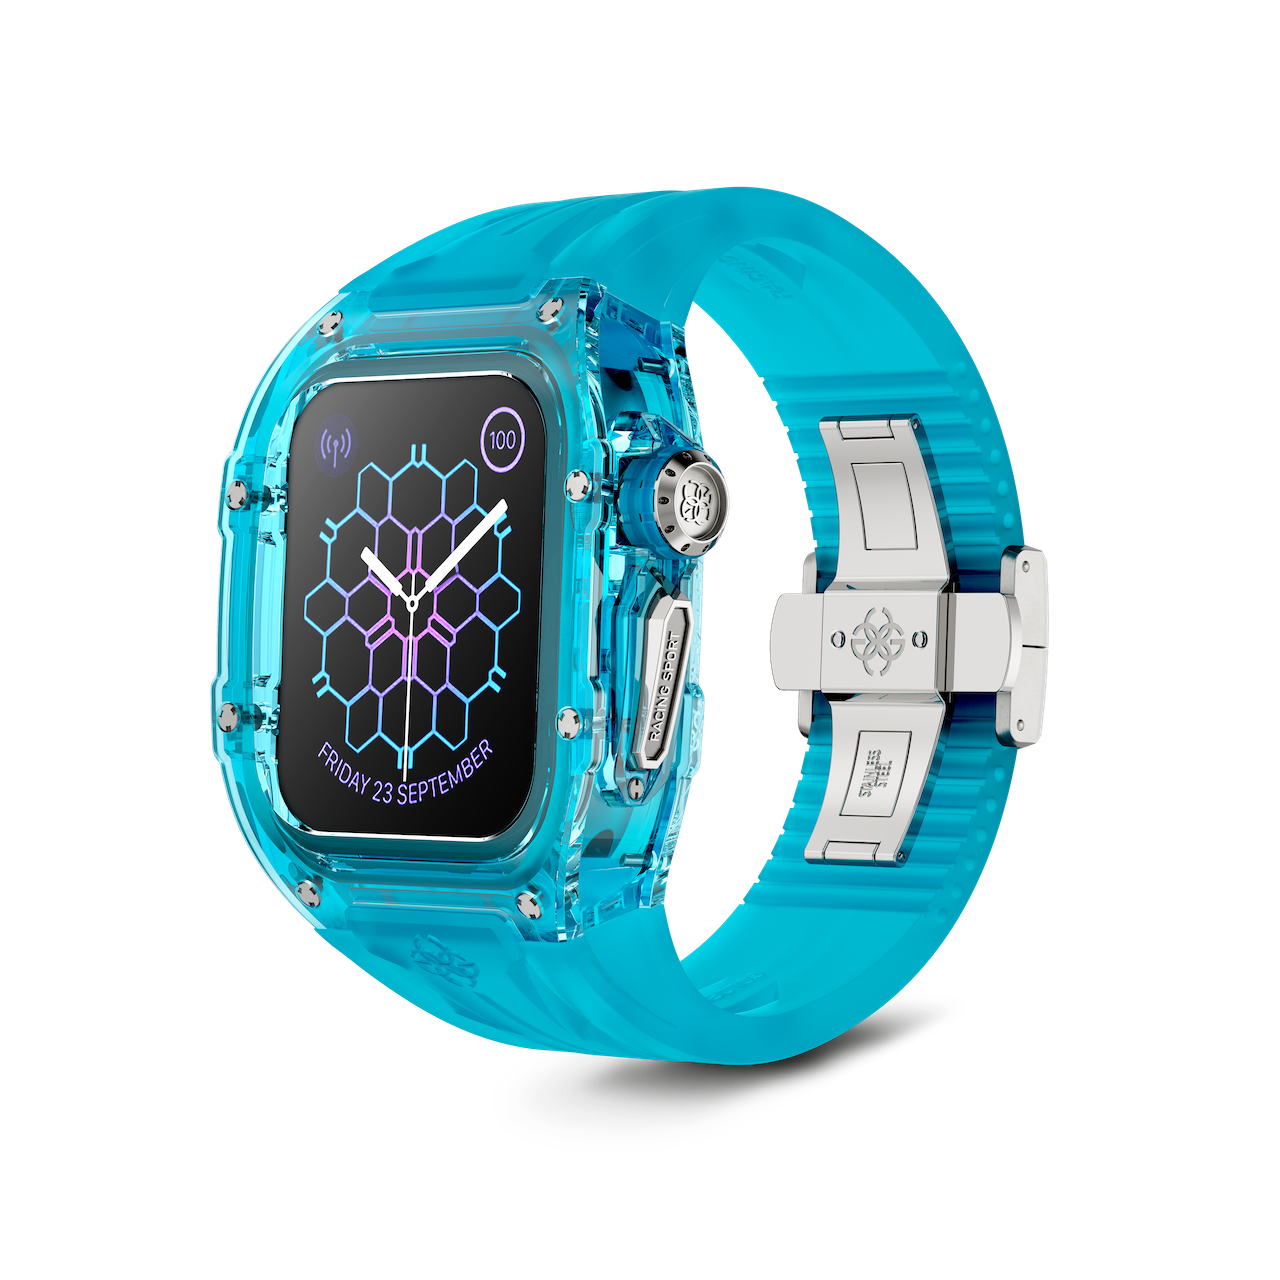 Apple Watch Case - RSTR45 - AQUA MINT